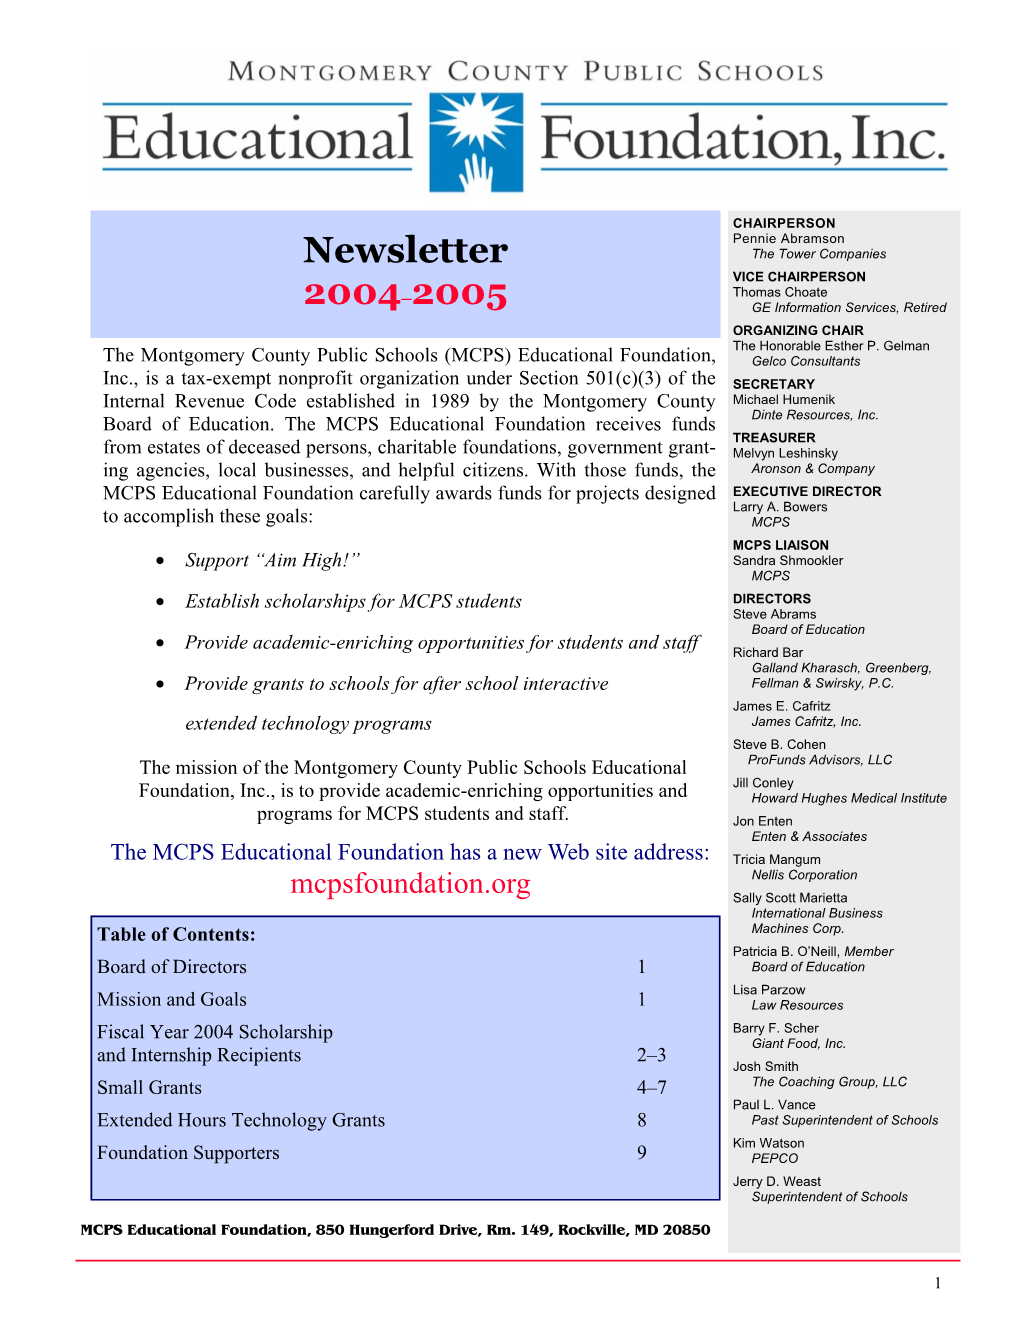 MCPS Educational Foundation, Inc. Newsletter 2004-05